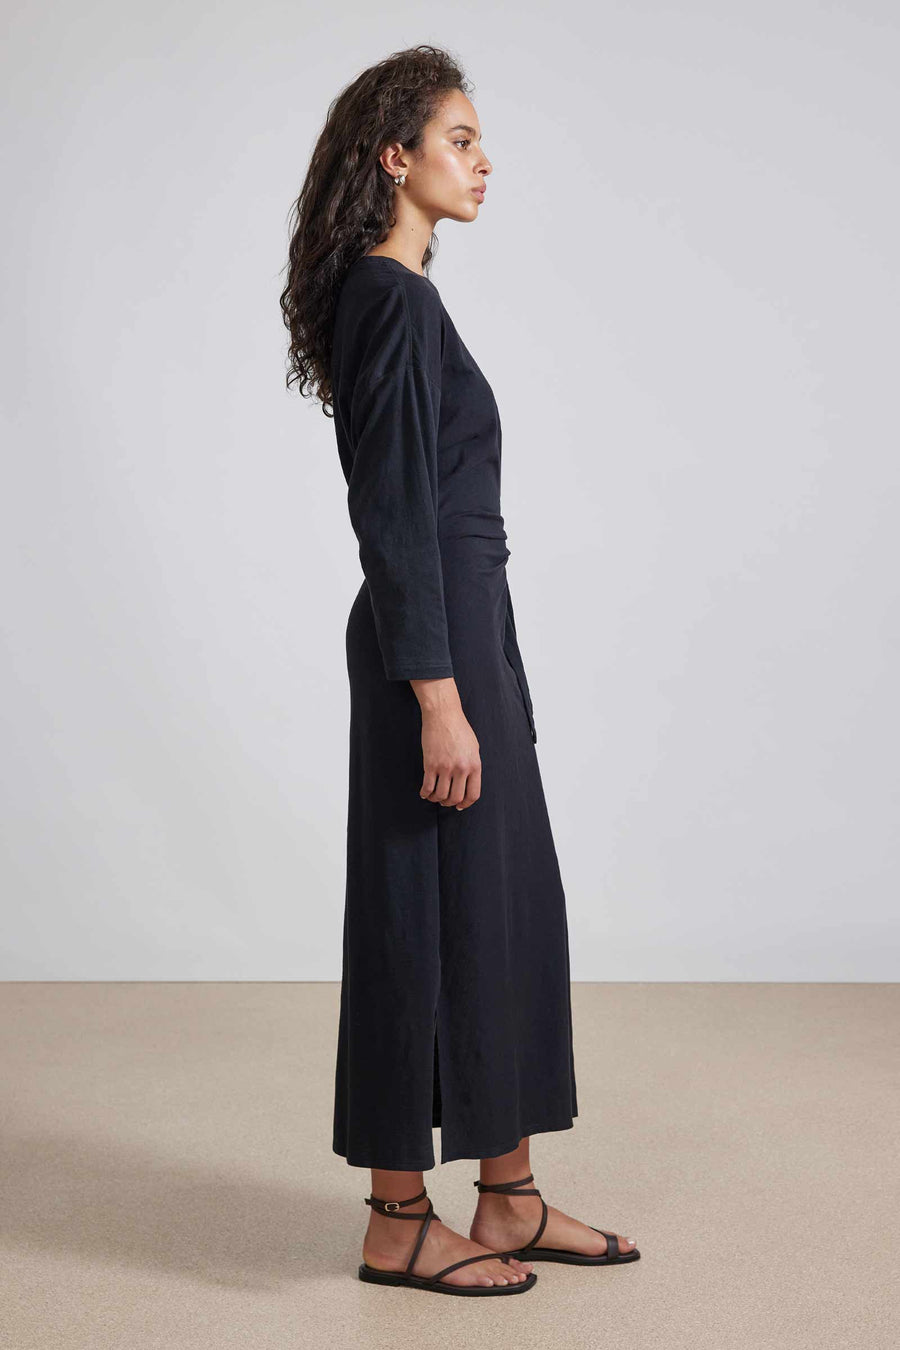 L/S Vinina Cinched Dress - Black